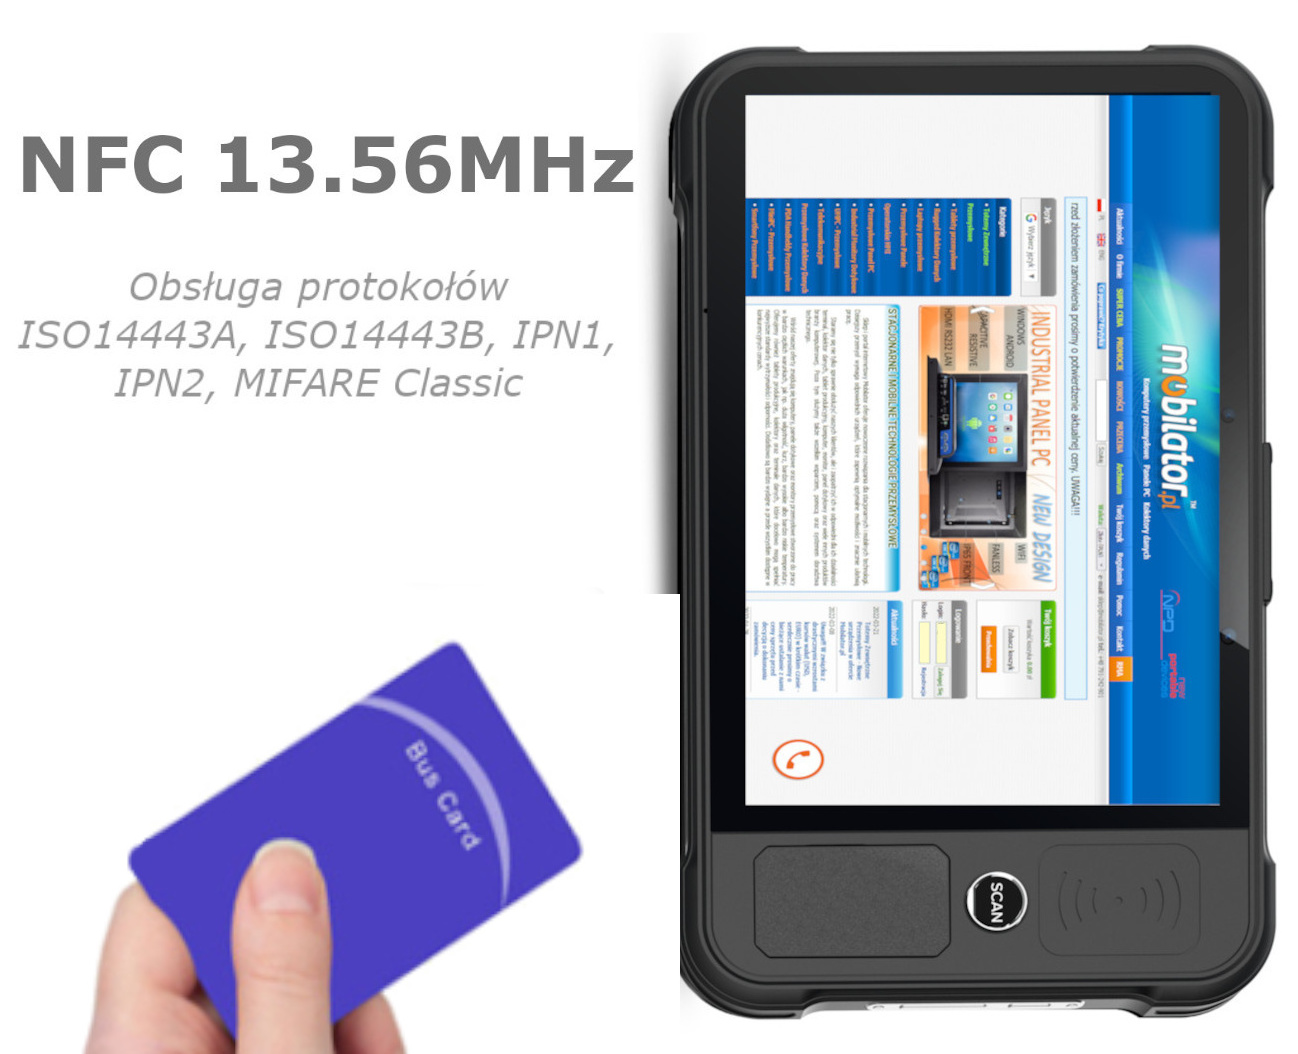 obsuga duej iloci protokow NFC w tablecie P80-PE